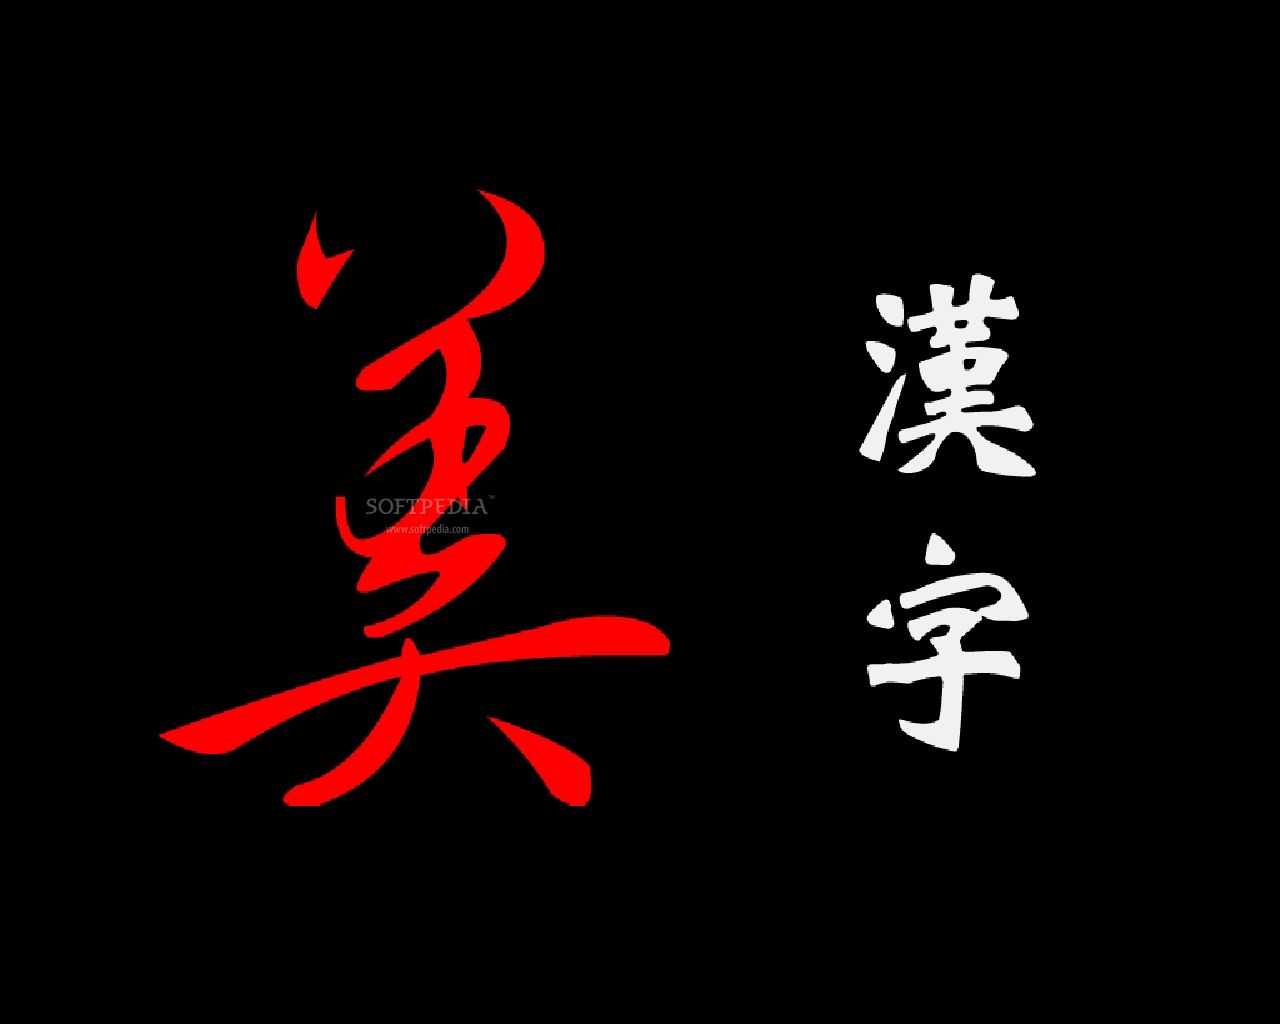 Chinese Symbol Wallpaper